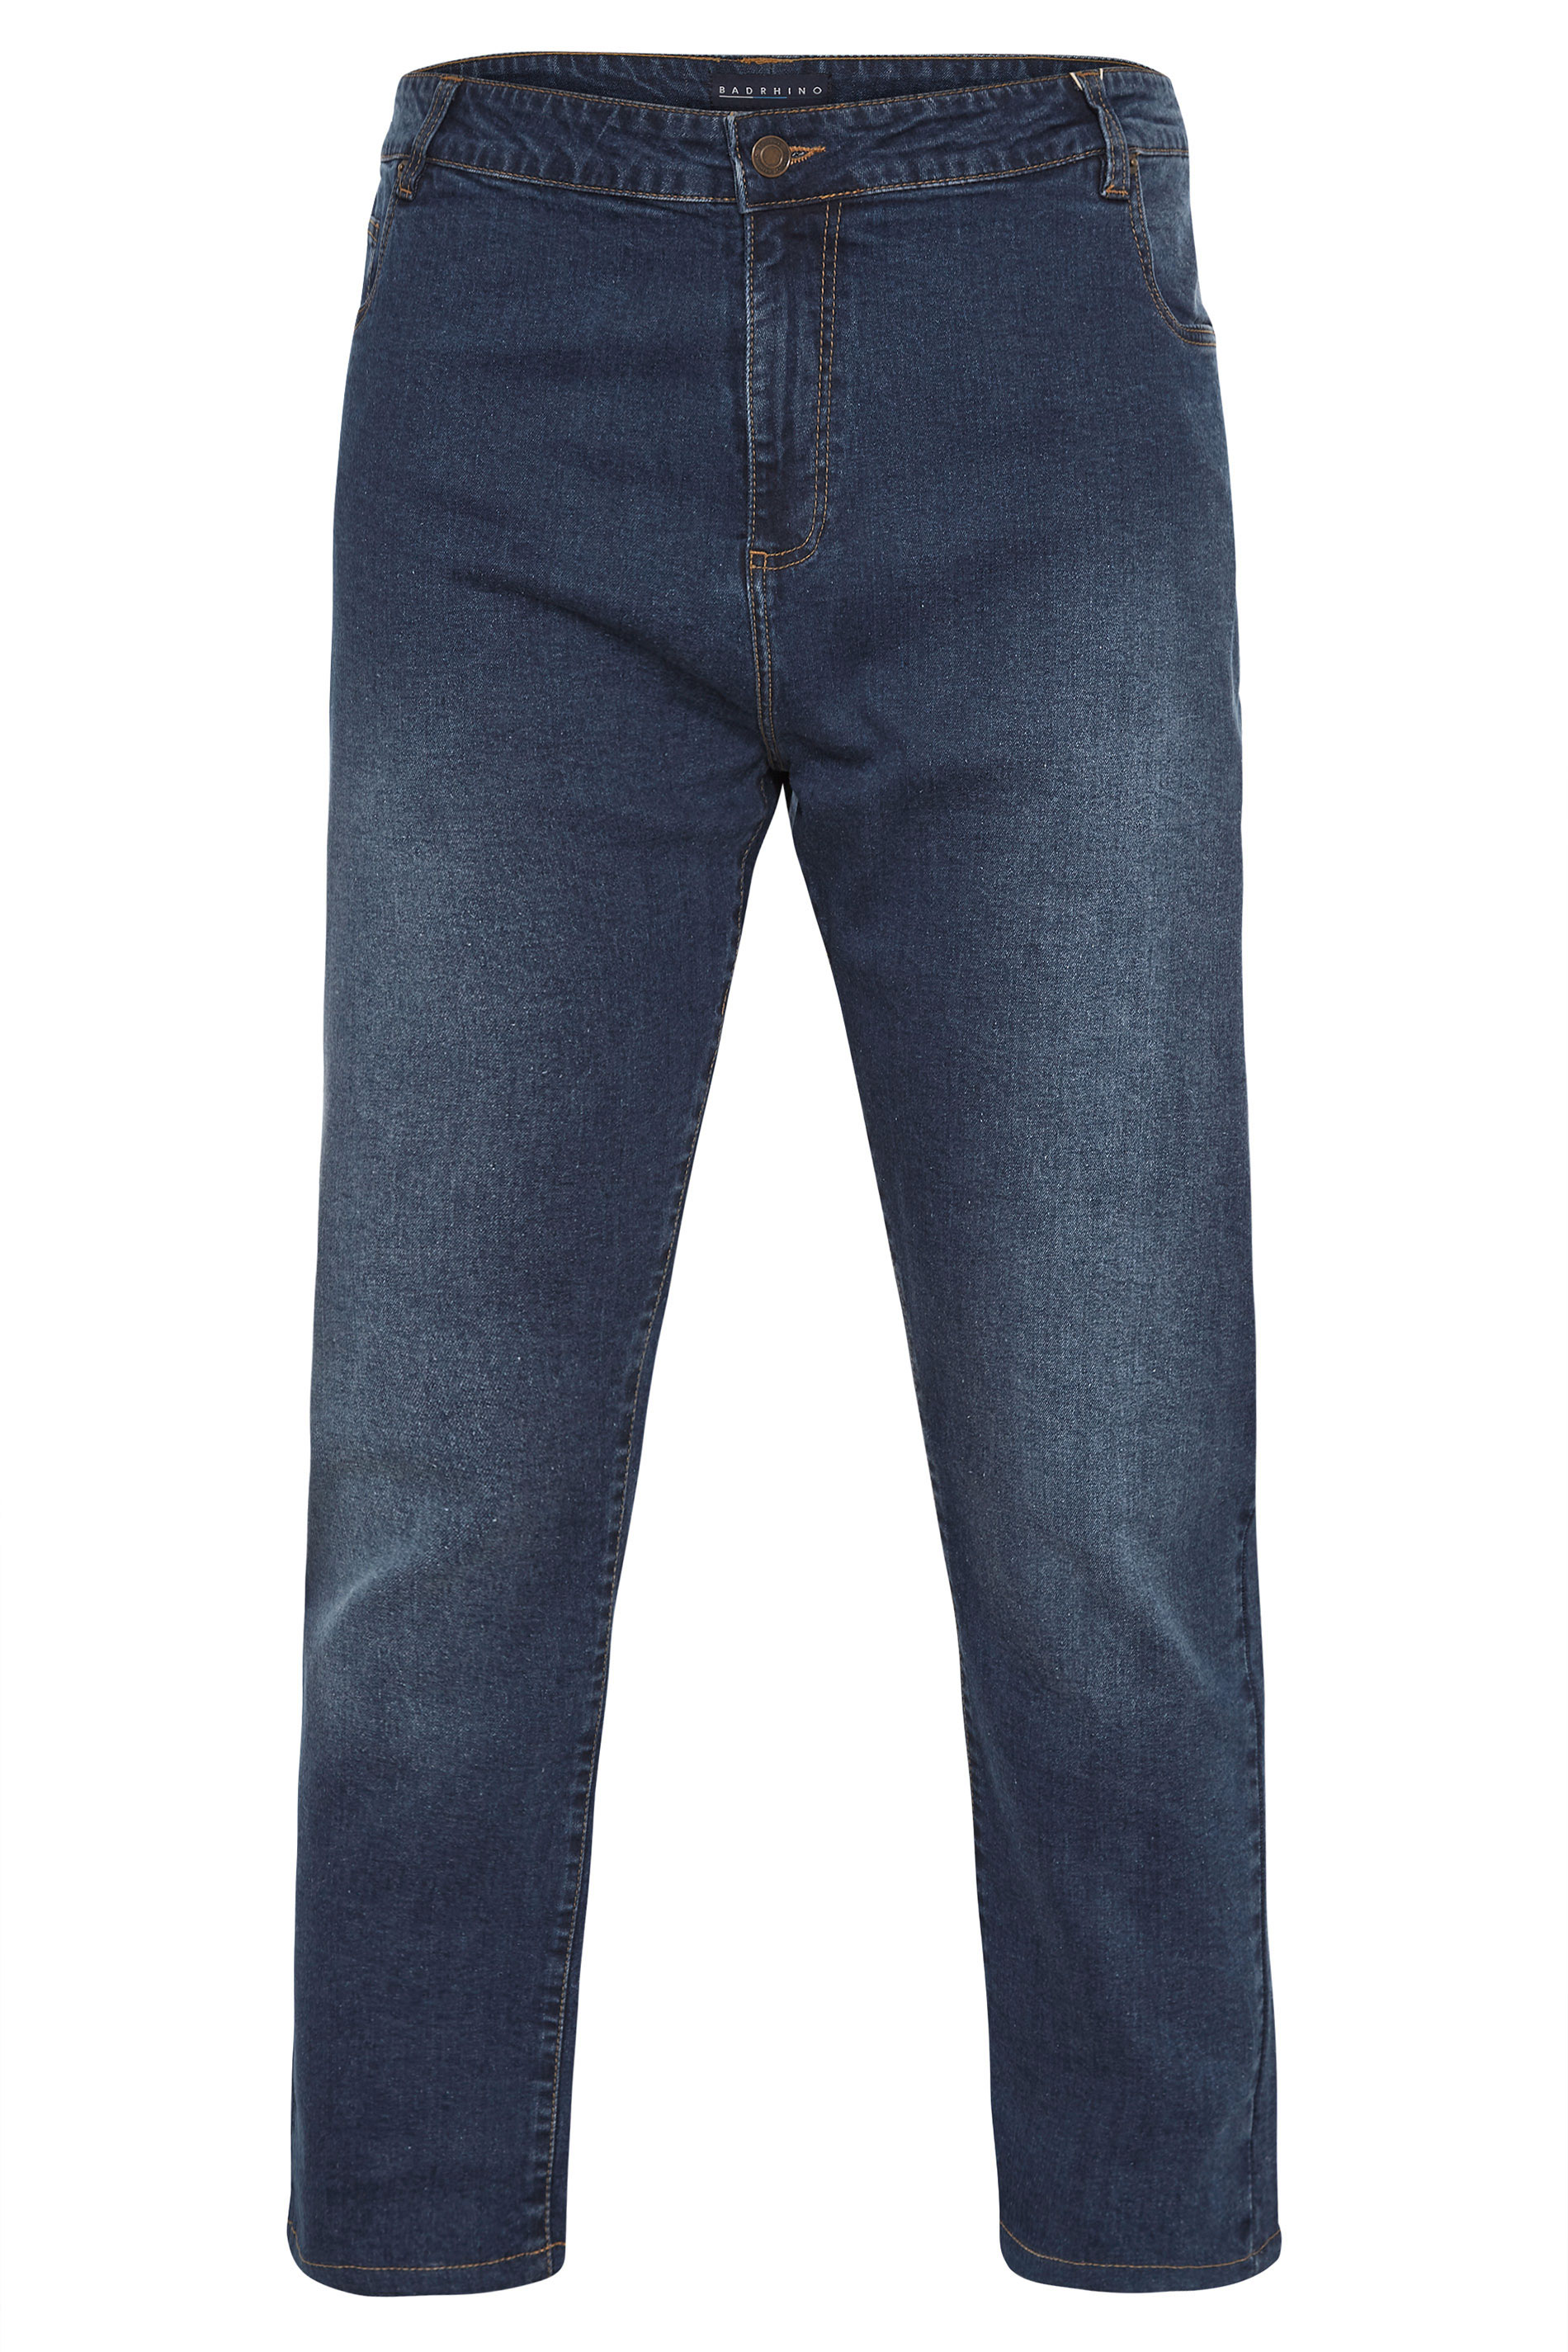 BadRhino Mid-Blue Stretch Jeans | BadRhino